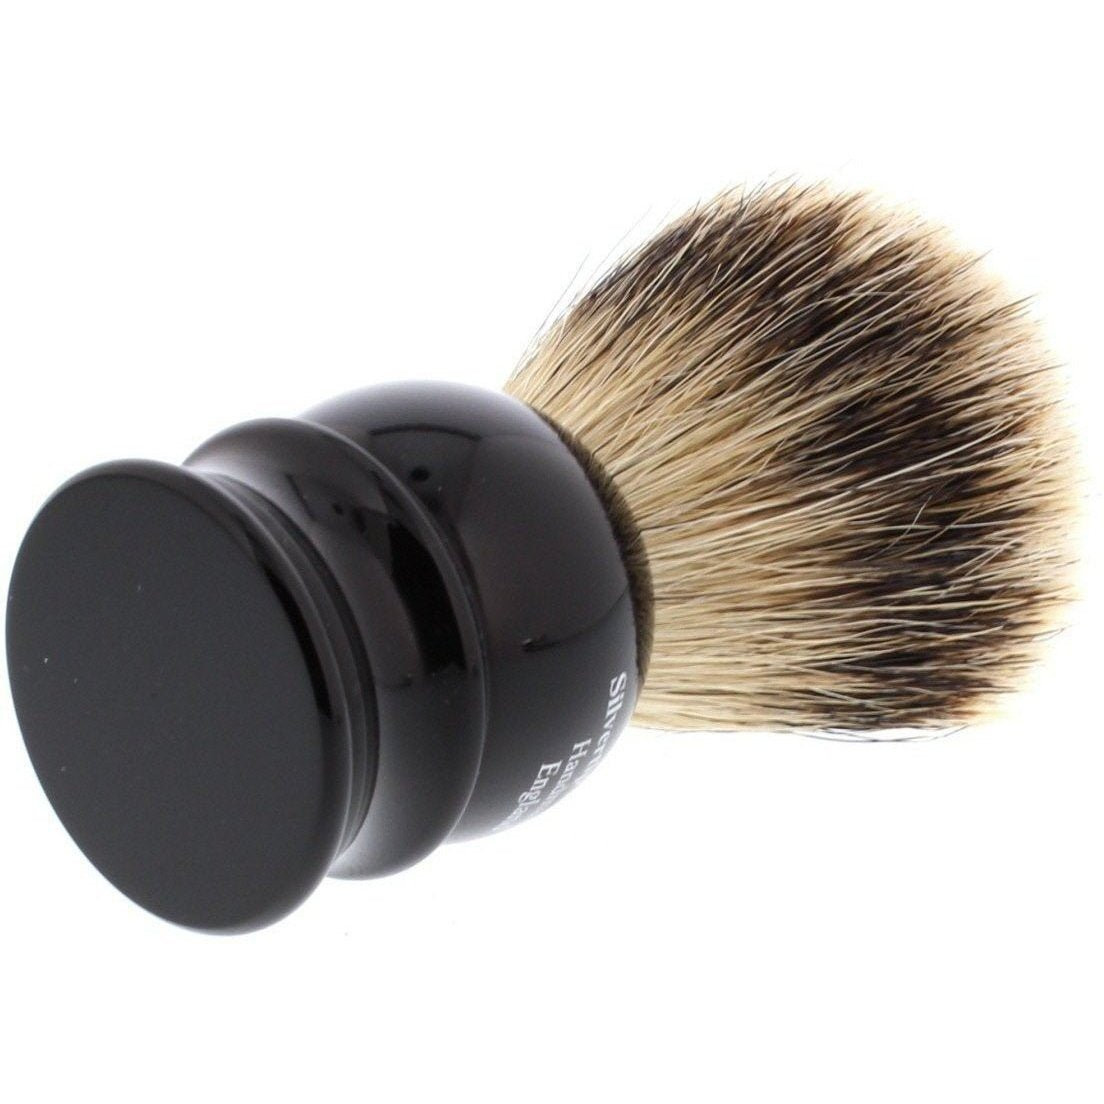 Product image 4 for Edwin Jagger Silver Tip Badger Shaving Brush, Medium, Black